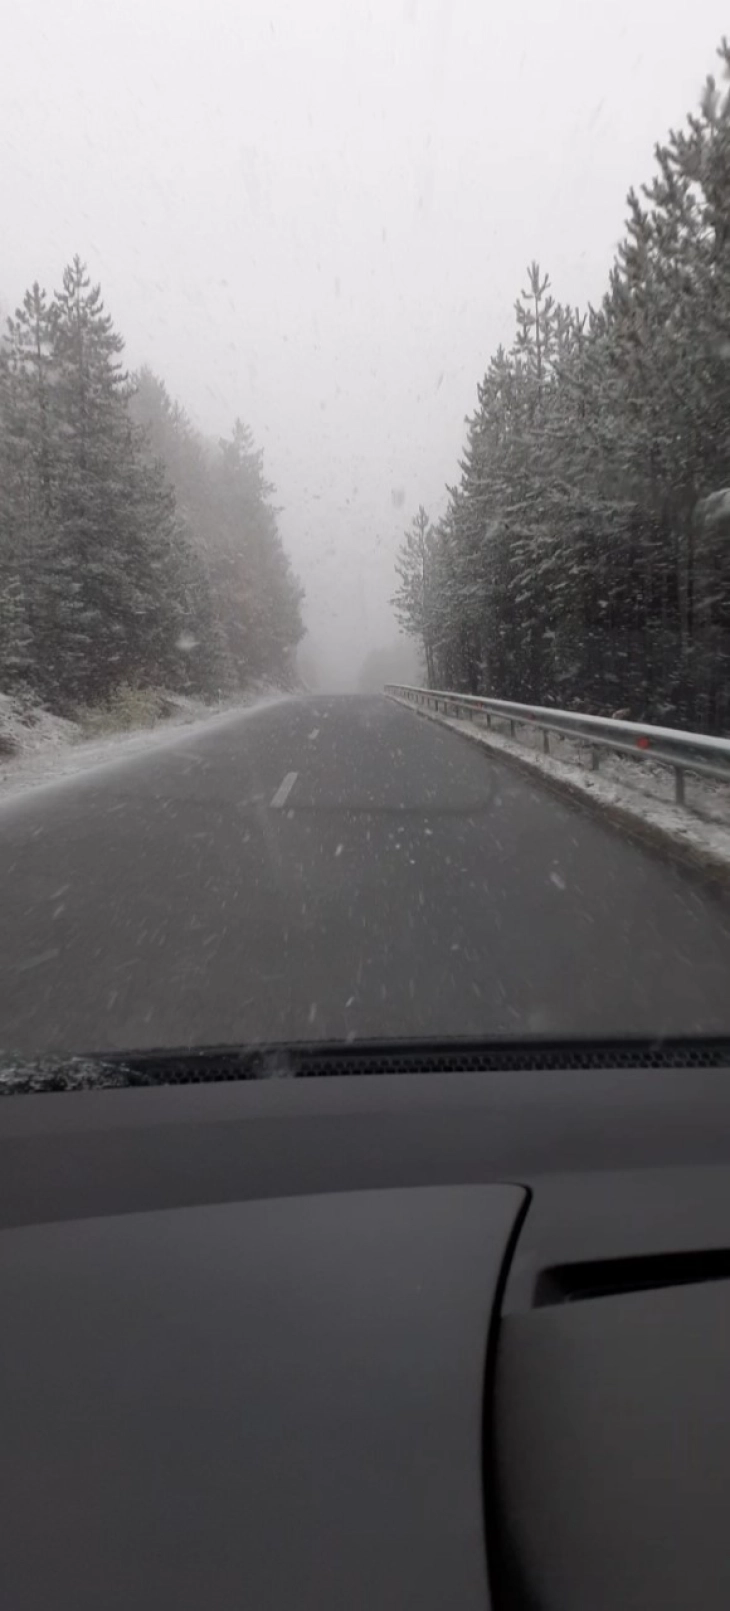 Malesh region gets first snow of the season